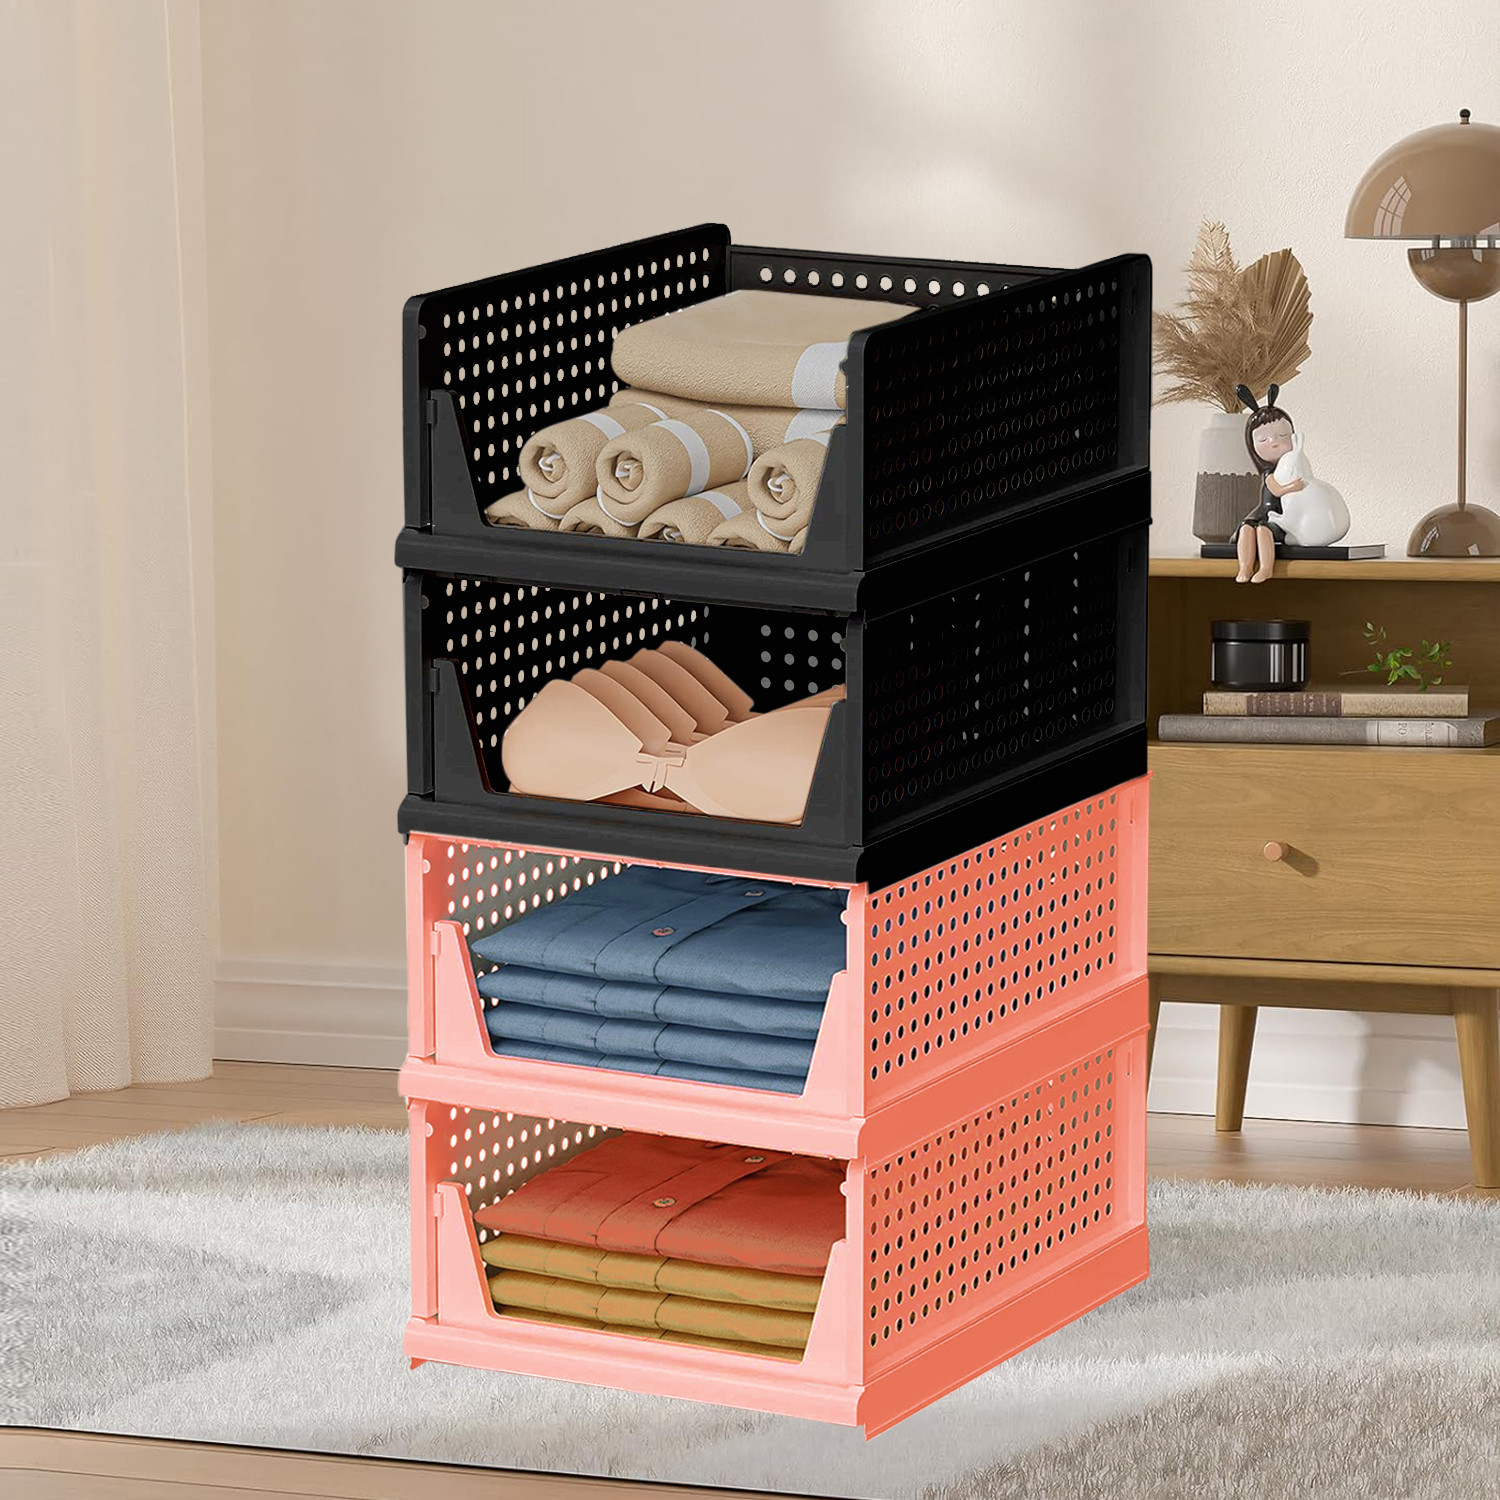 Kuber Industries Storage Organizer | Wardrobe Organizer | Cloth Organizer | Foldable Shirt Stacker Box for Almirah | Closet Storage Basket | Large | Light Pink & Black